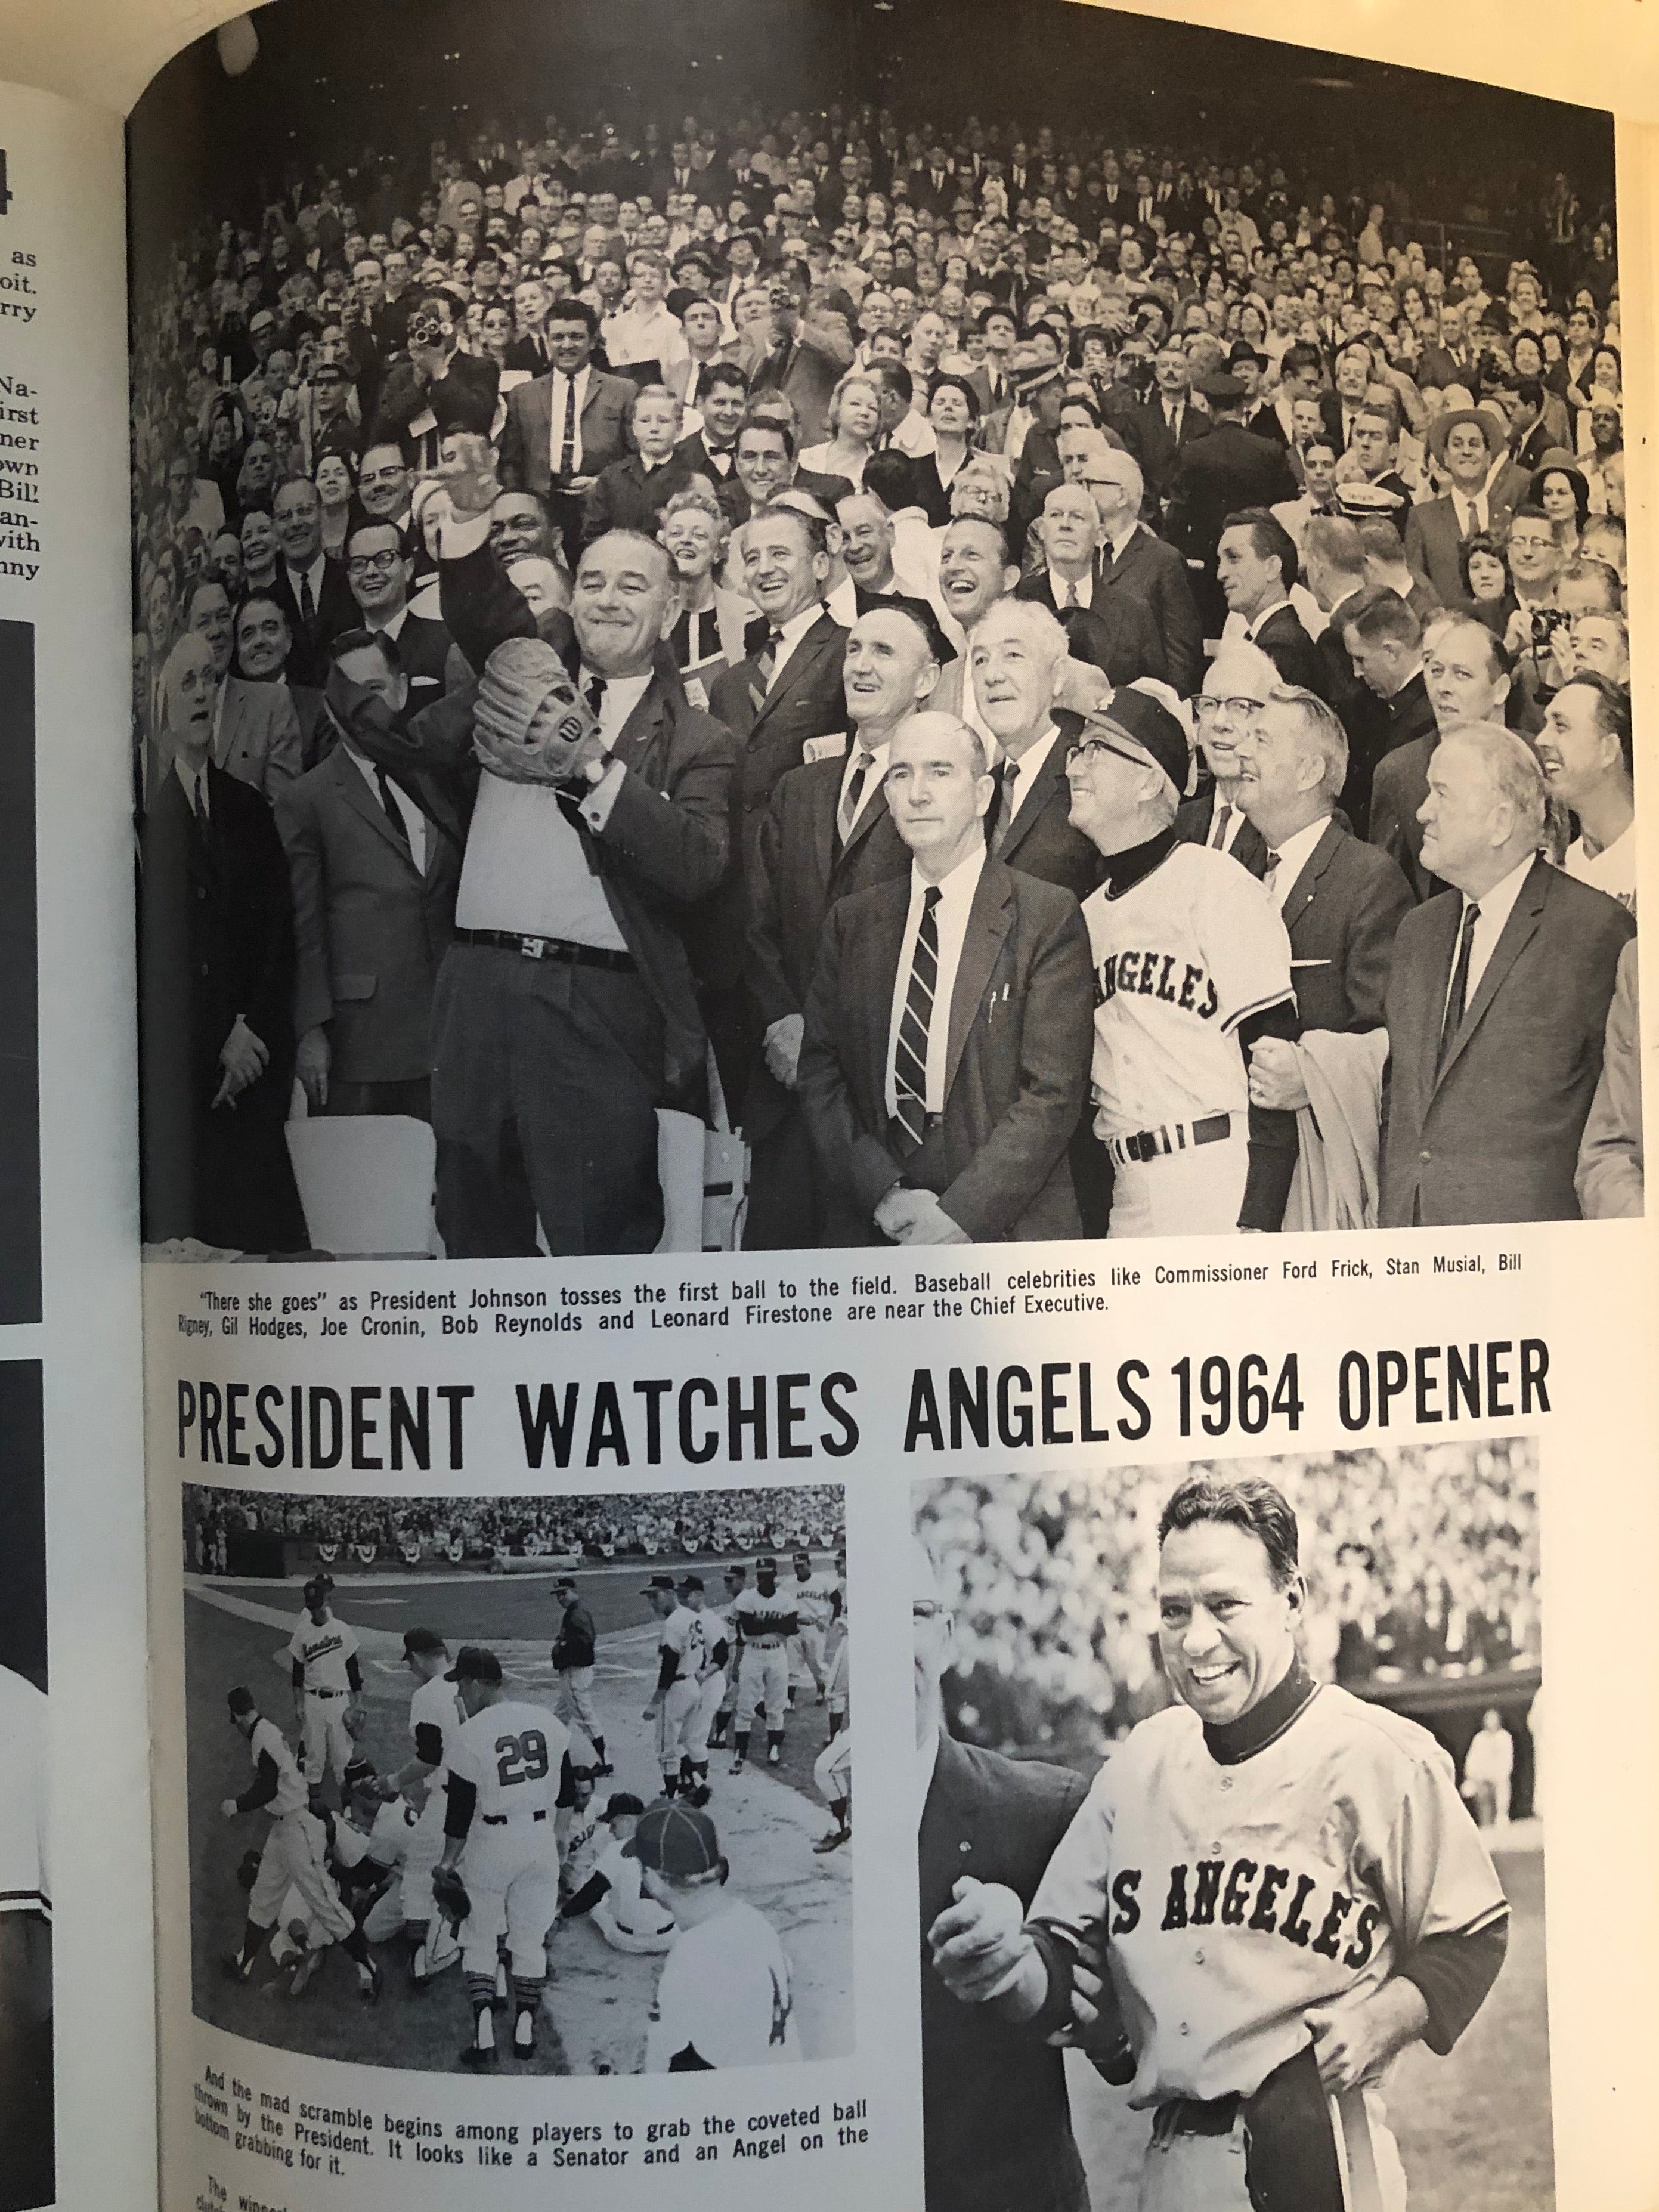 1964 Los Angeles baseball year book